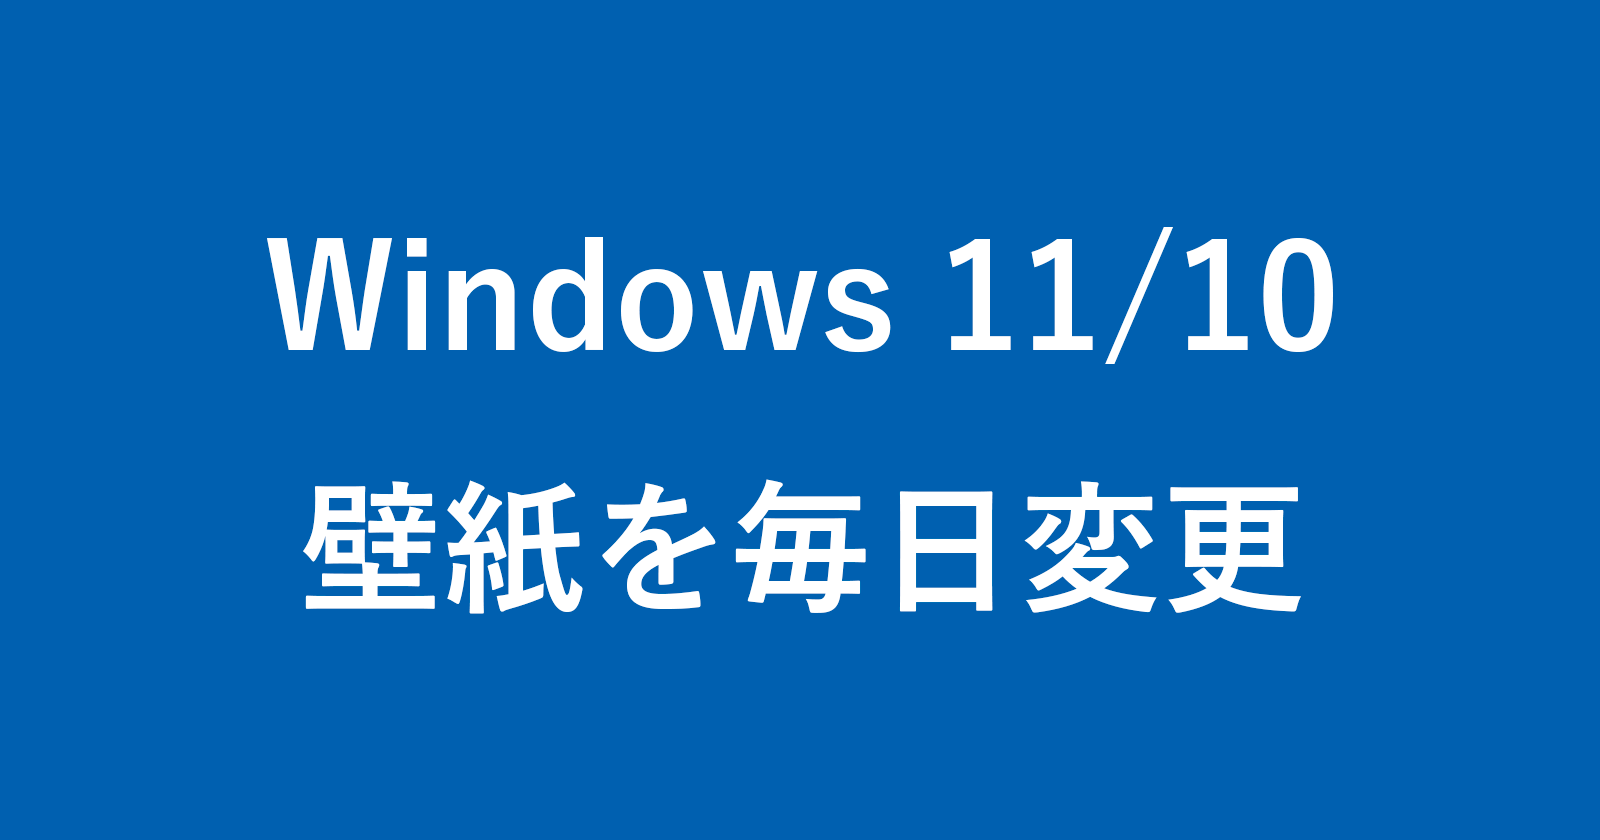 windows 11 10 automatically change wallpaper